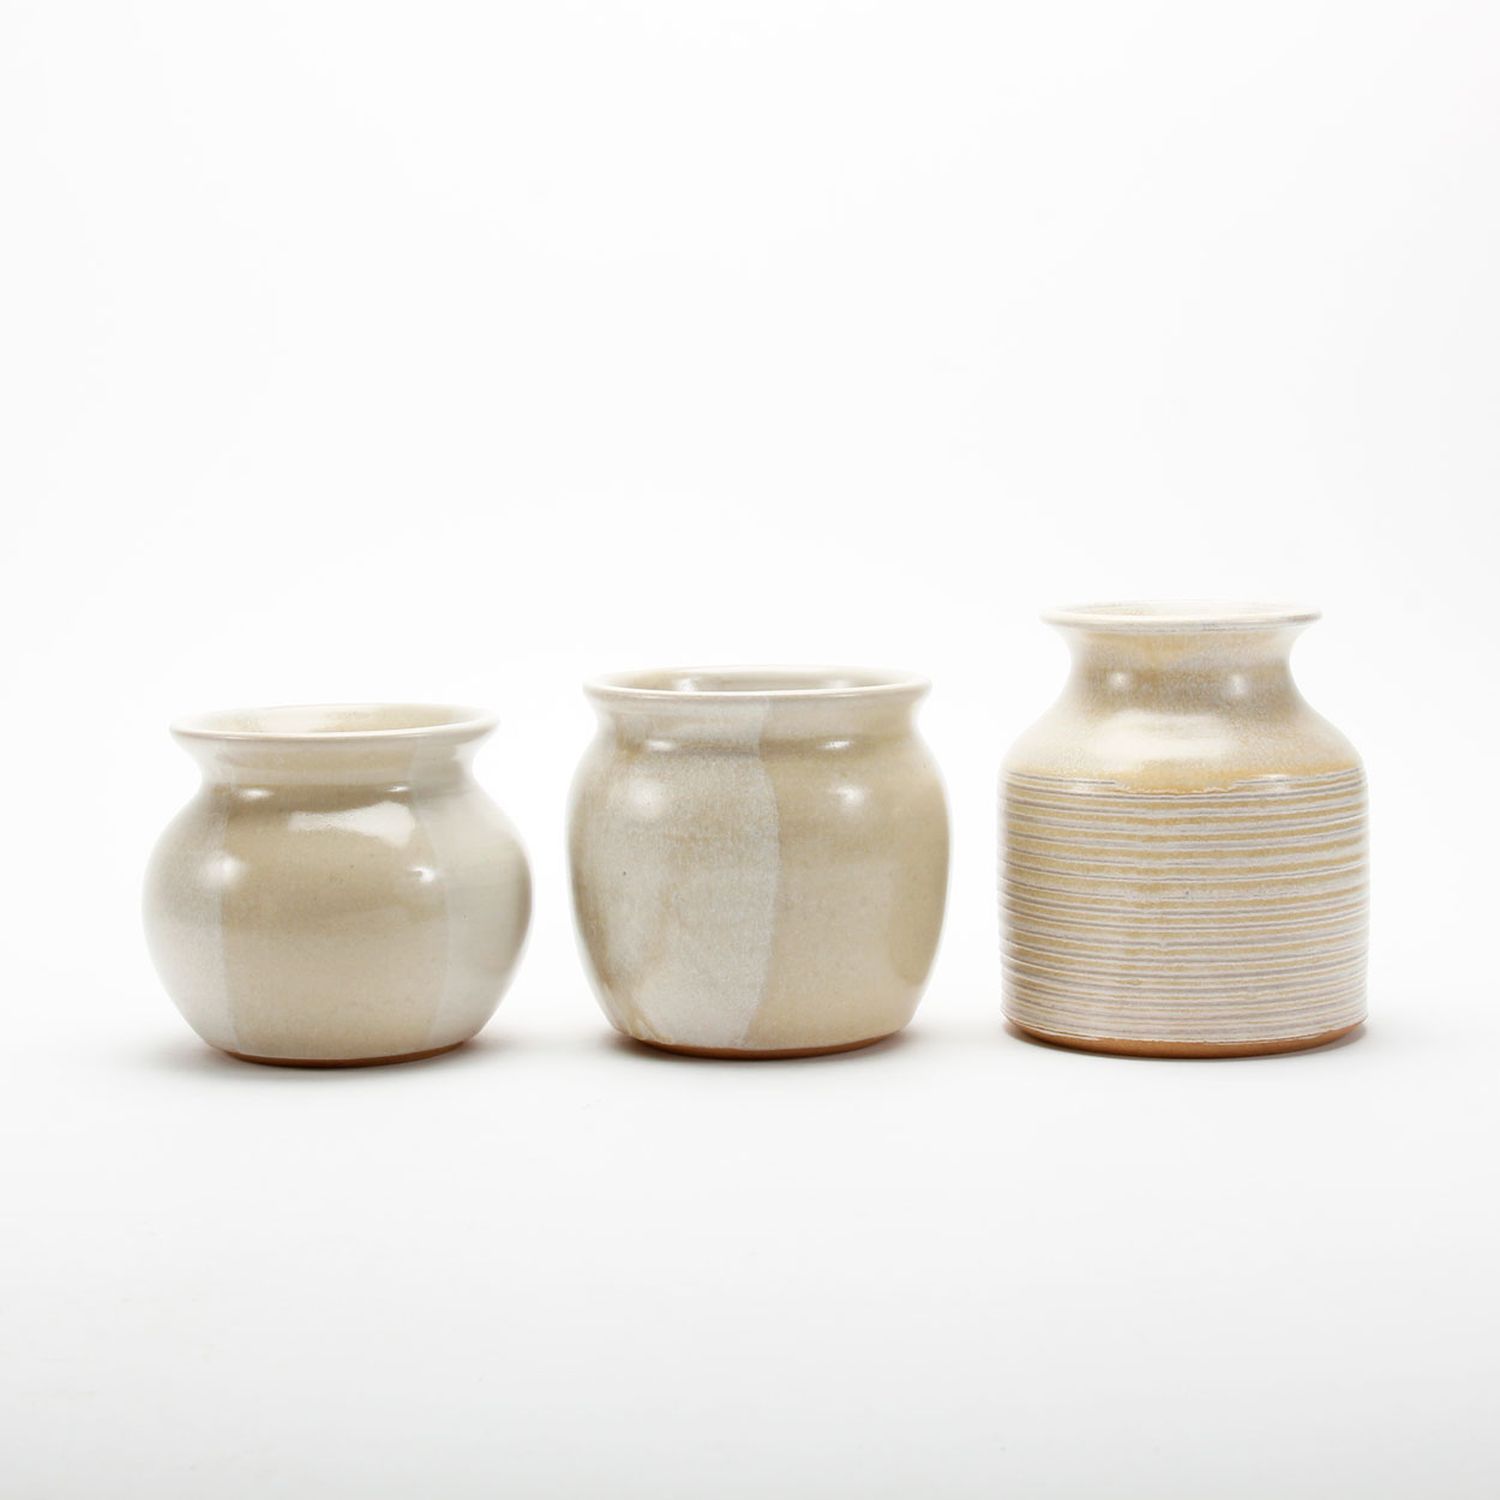 Danielle Skentzos: Medium Vase Product Image 2 of 2